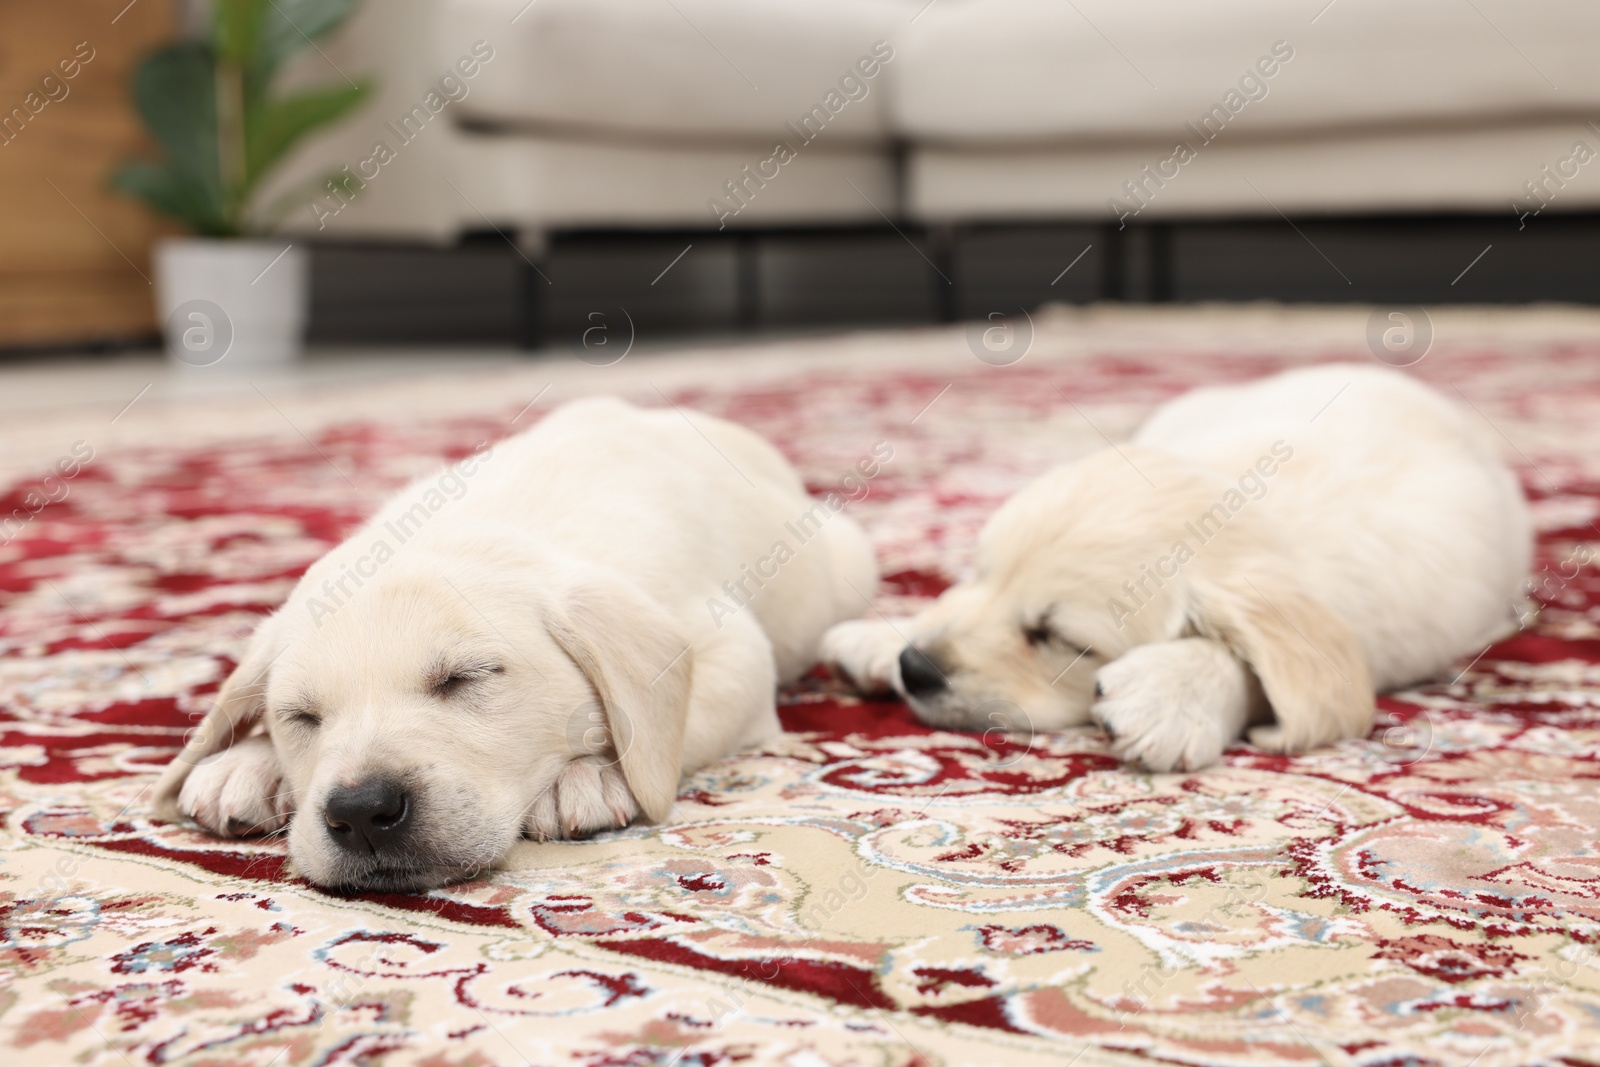 Photo of Cute little puppies sleeping on carpet indoors